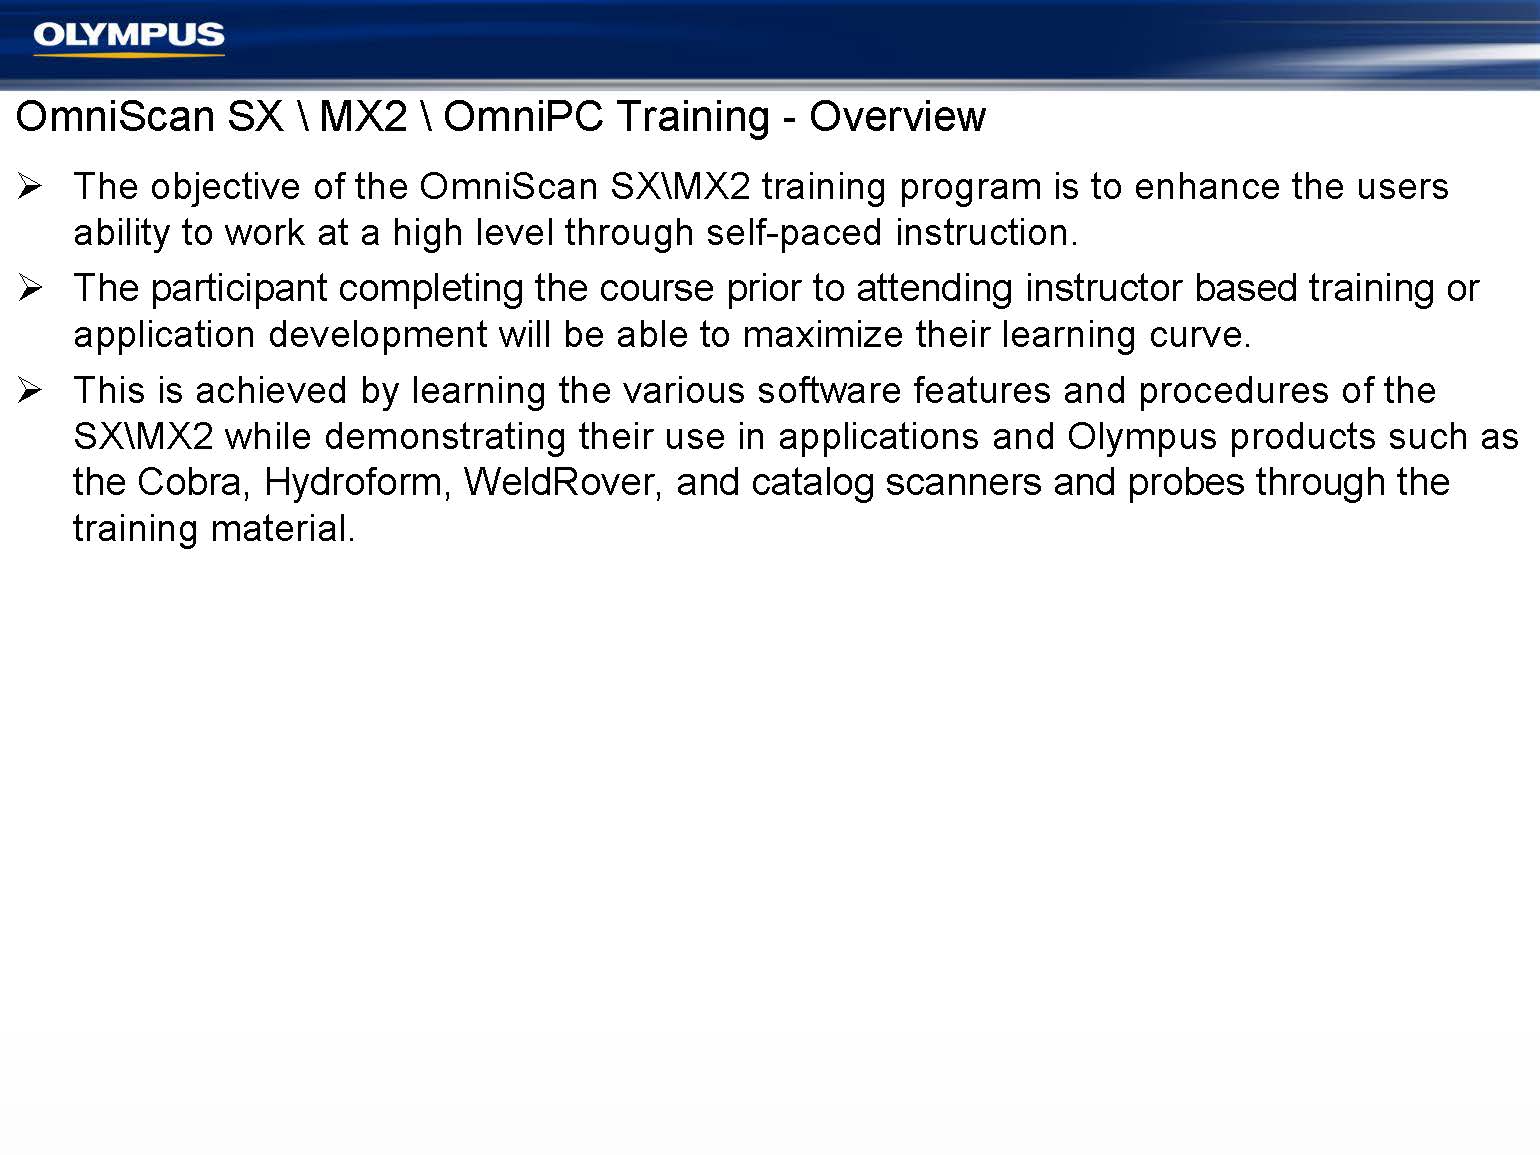 OmniScan MX2 Training